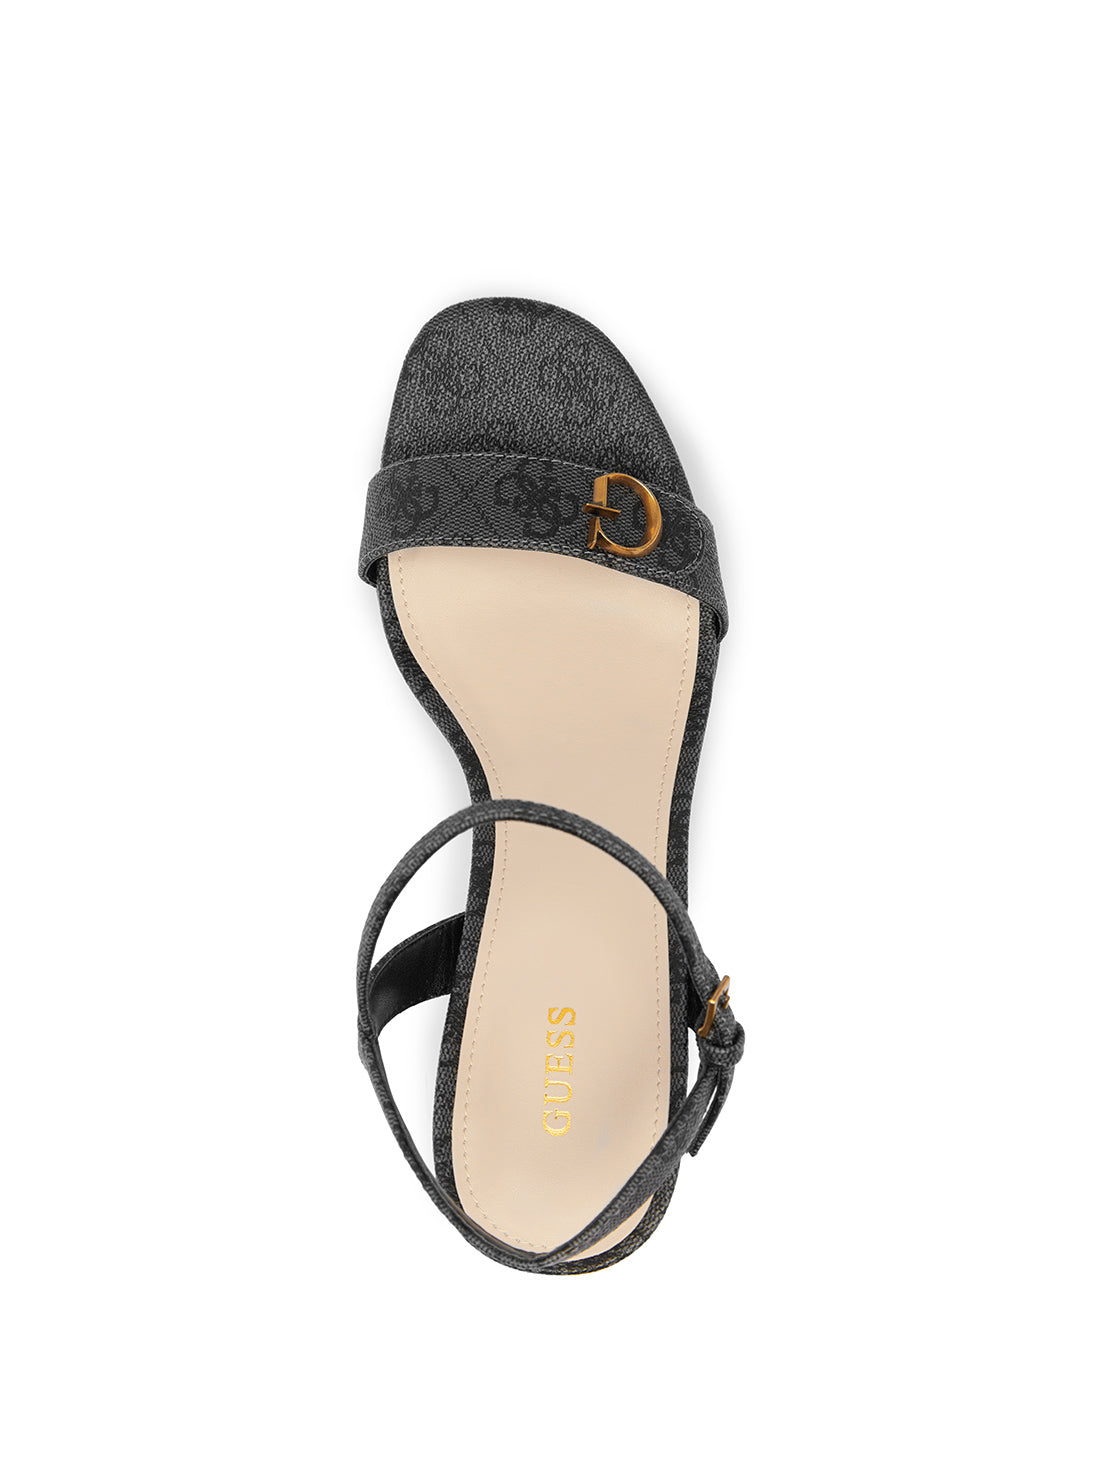 Black Logo Sherrill Platform Sandal Heels | GUESS Women's Heels | top view